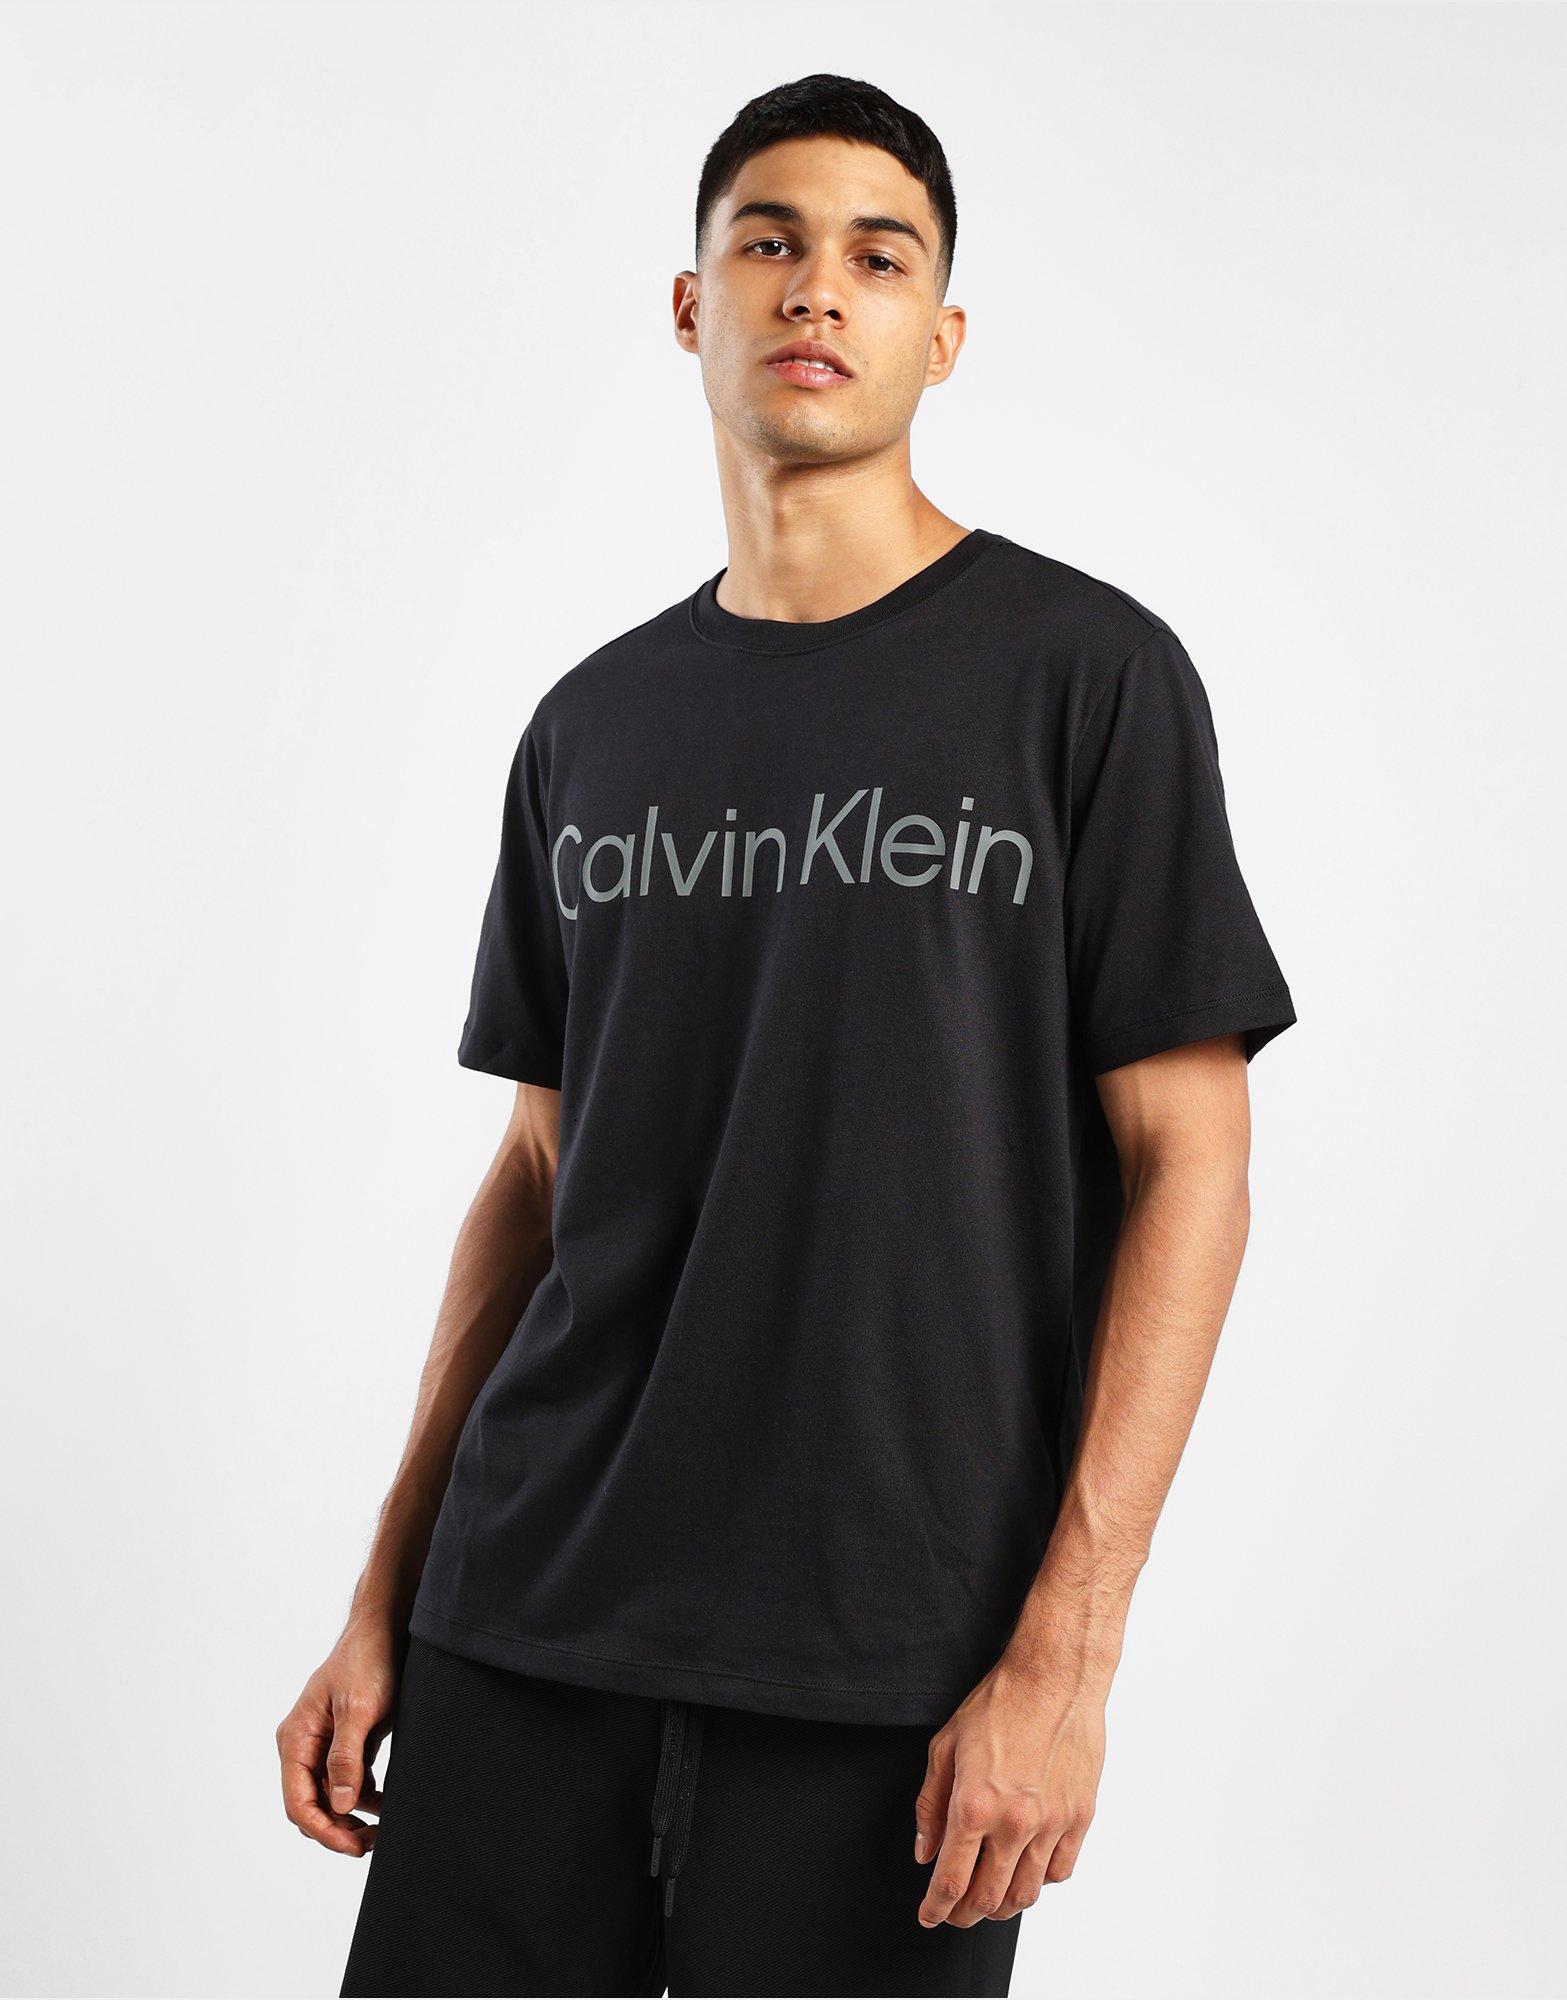 Flipper Metafoor Verkeersopstopping Black Calvin Klein Essentials Logo T-Shirt - JD Sports Singapore